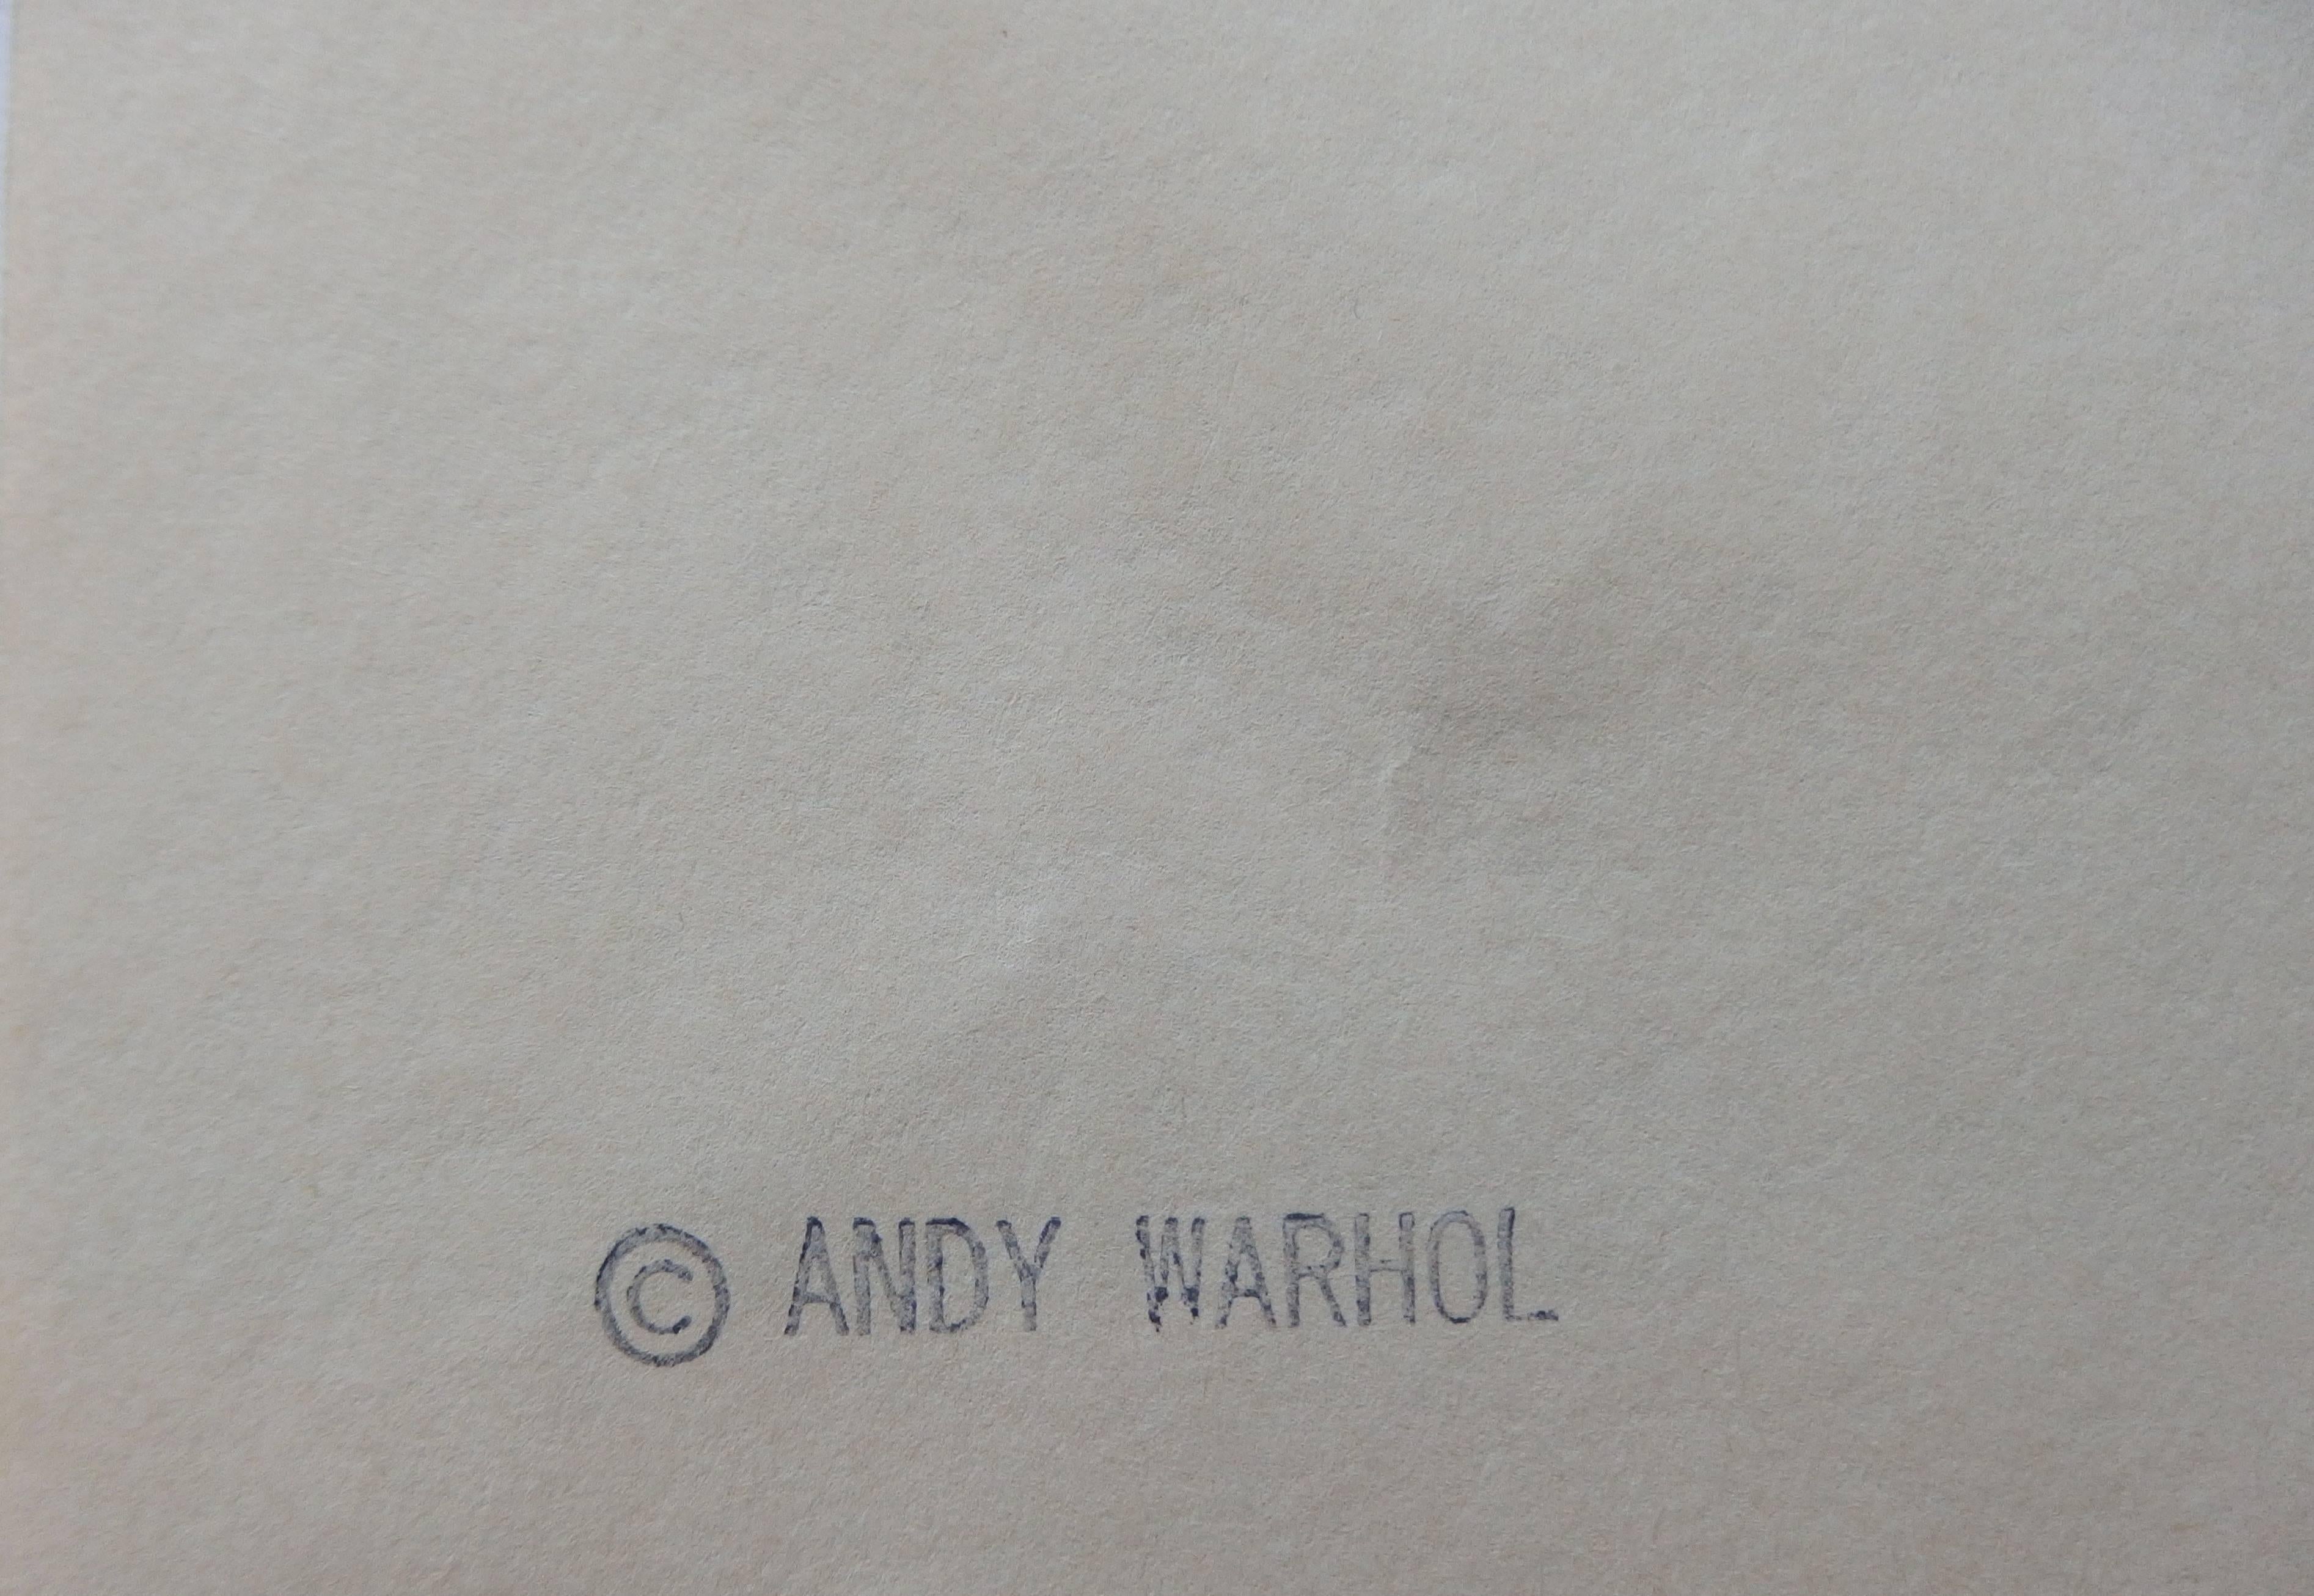 Andy WARHOL - The thirteen most wanted, orginal  screen print 1